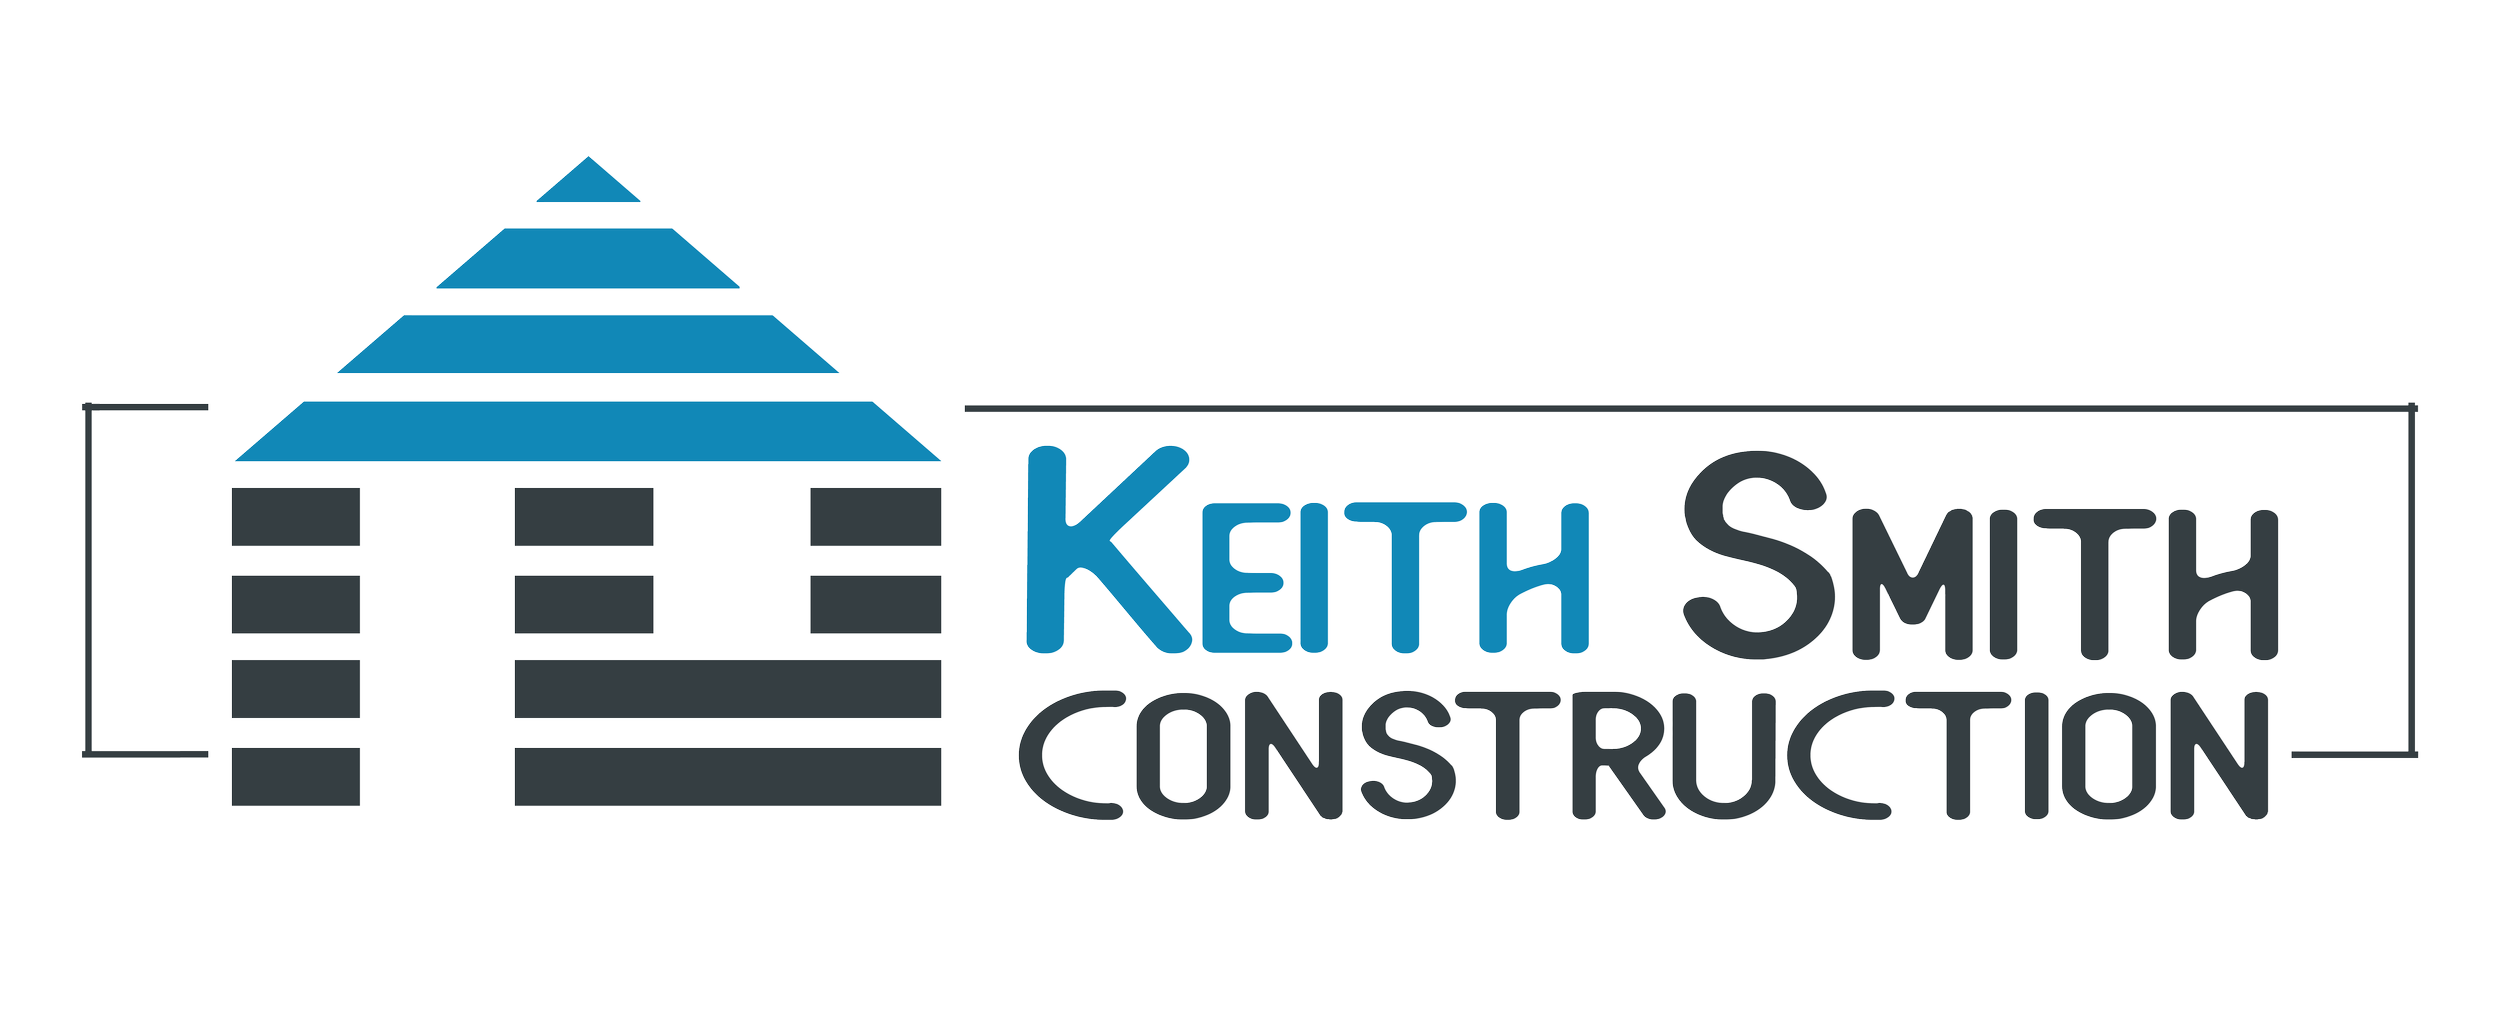 Keith Smith Construction, LLC